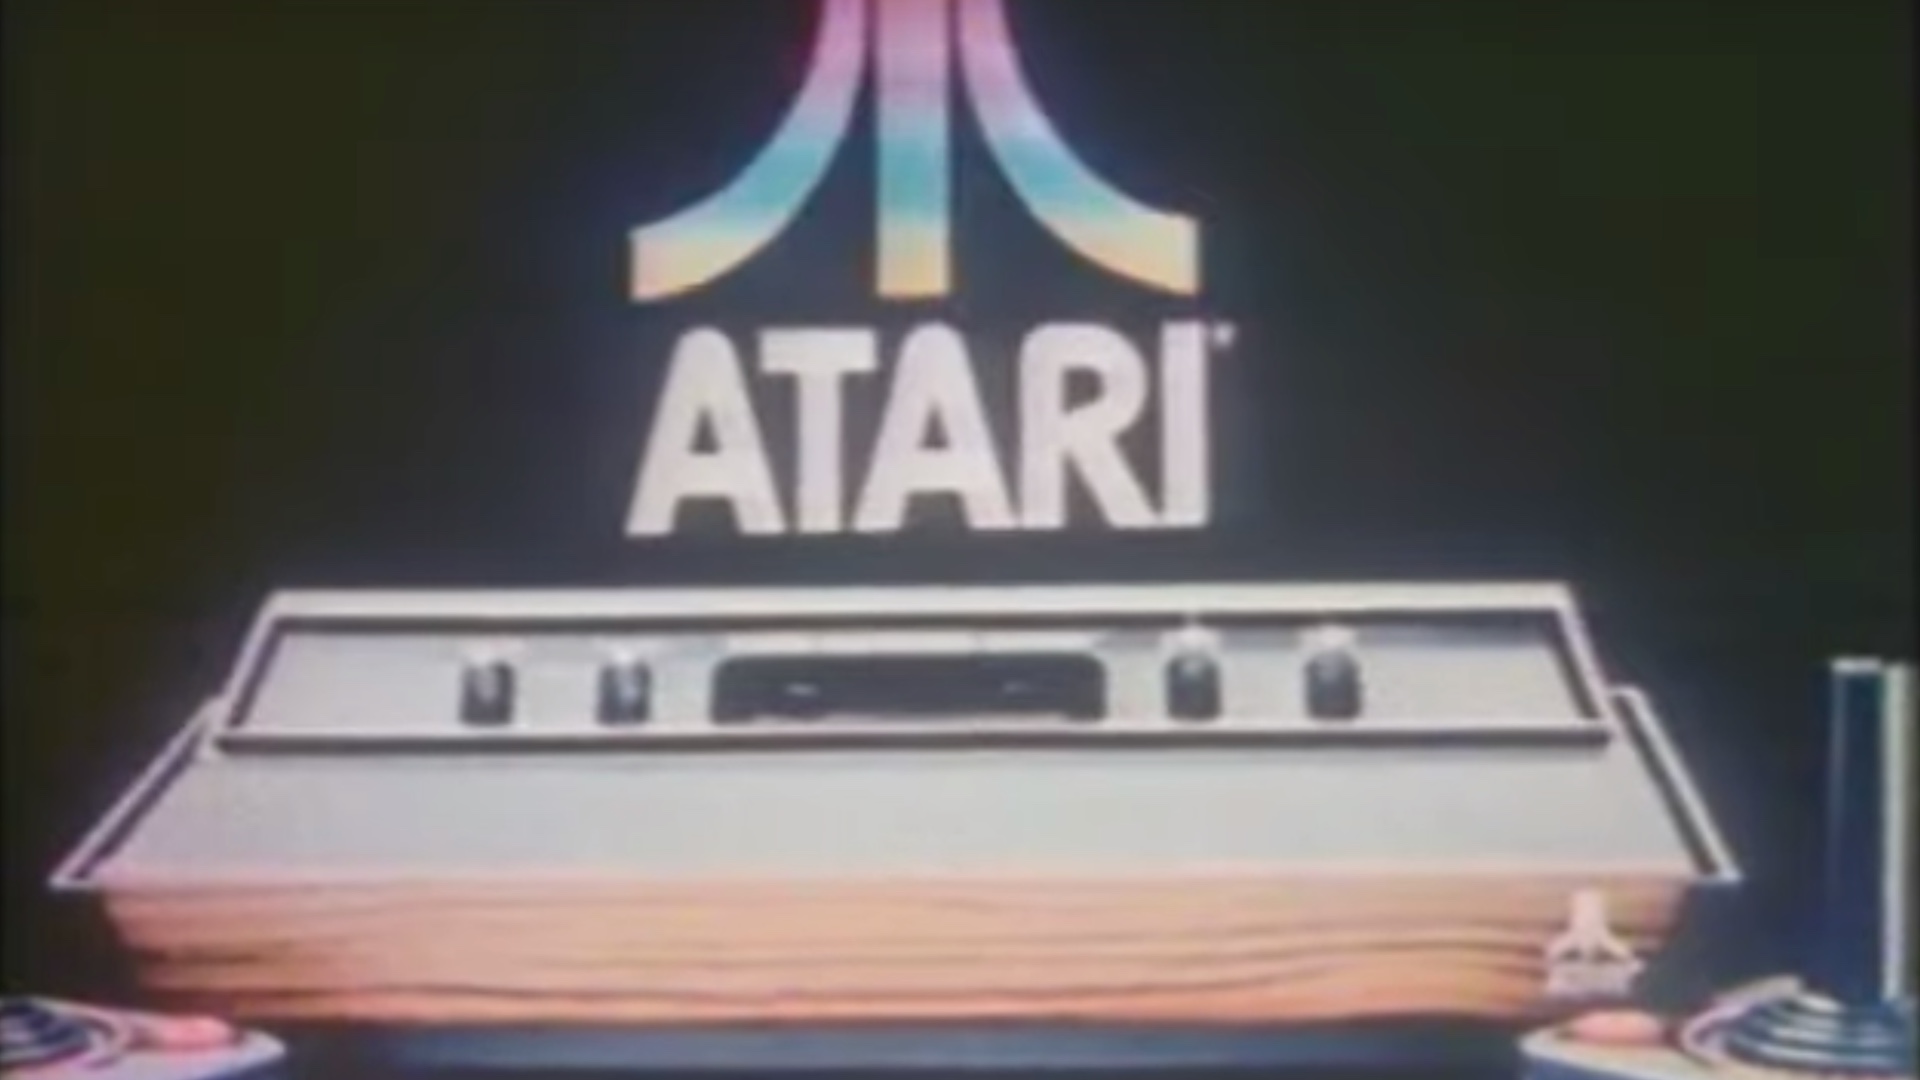 atari from the 80s